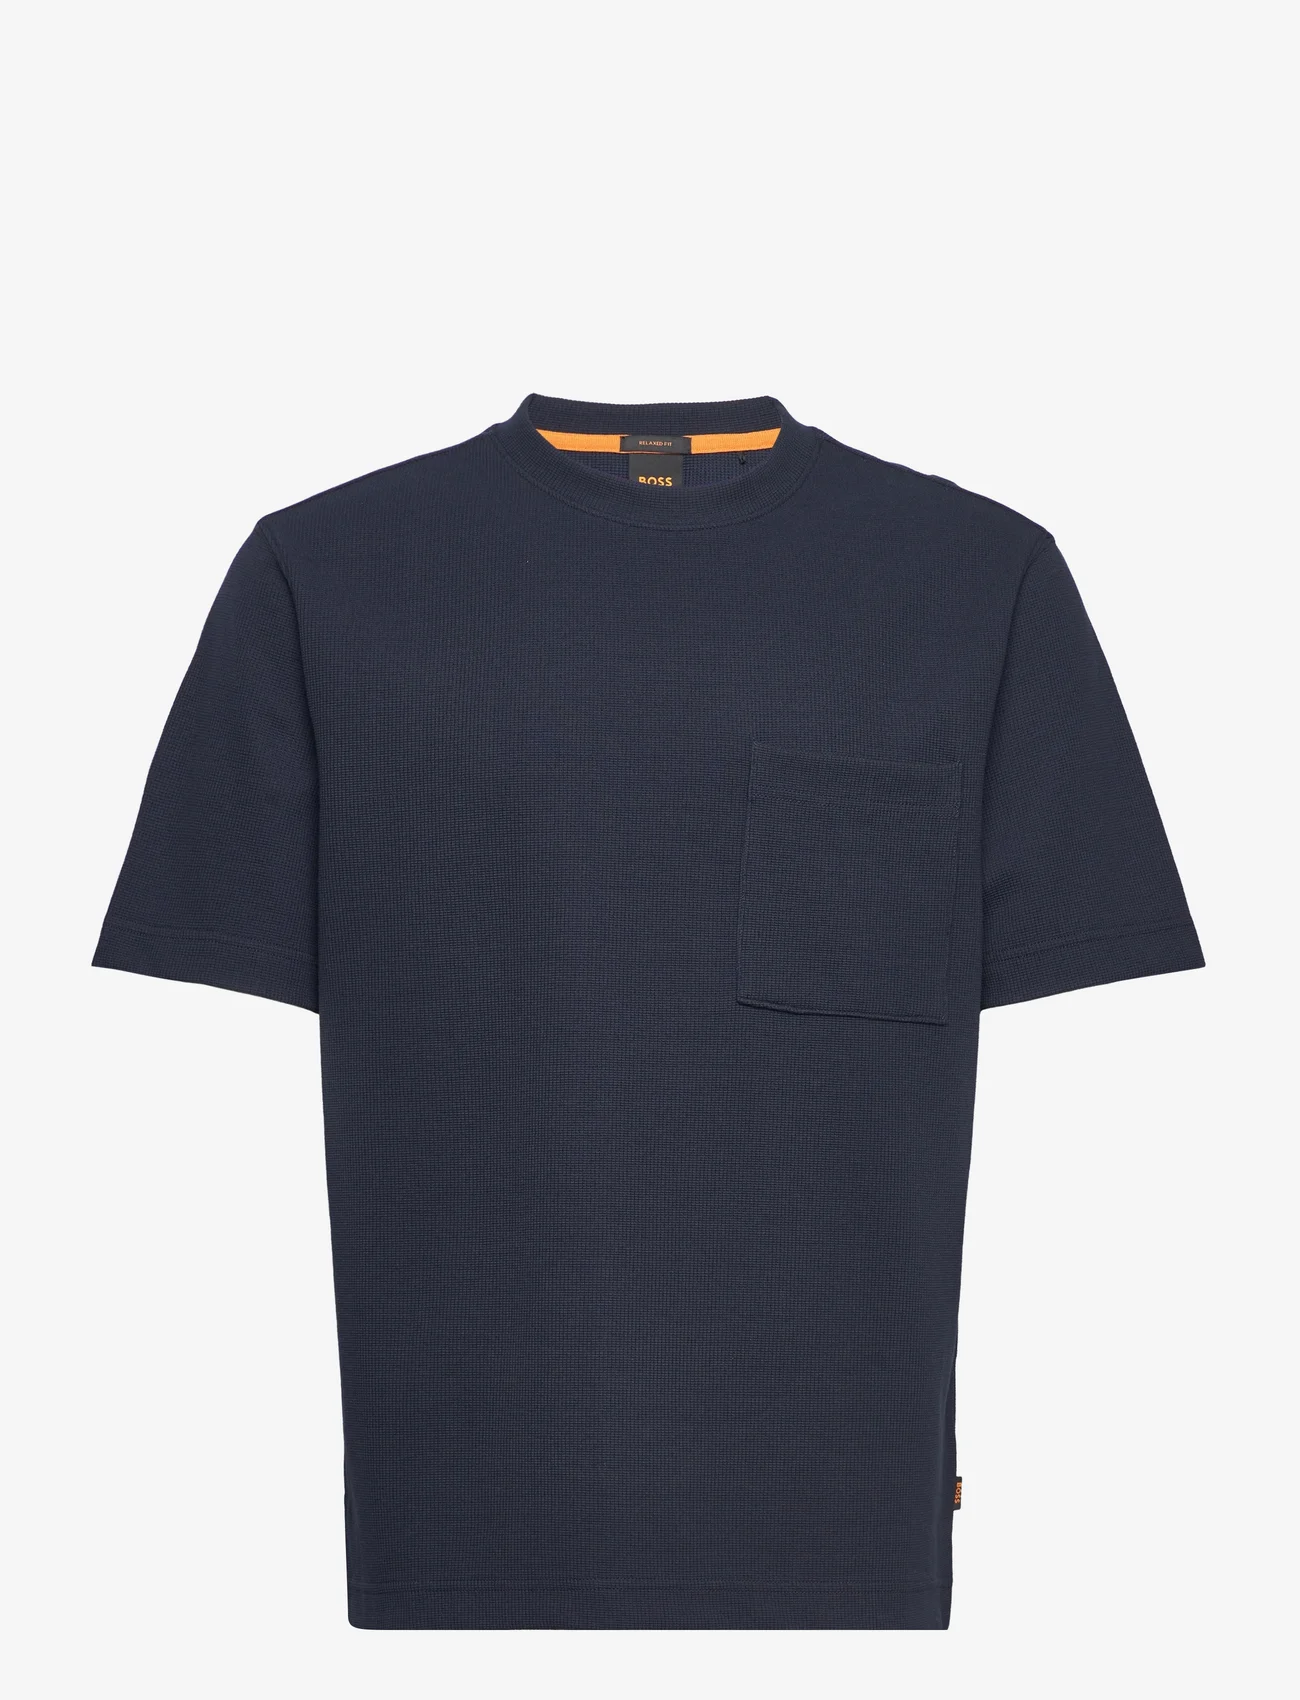 BOSS - Tempestoshort - basic t-shirts - dark blue - 0